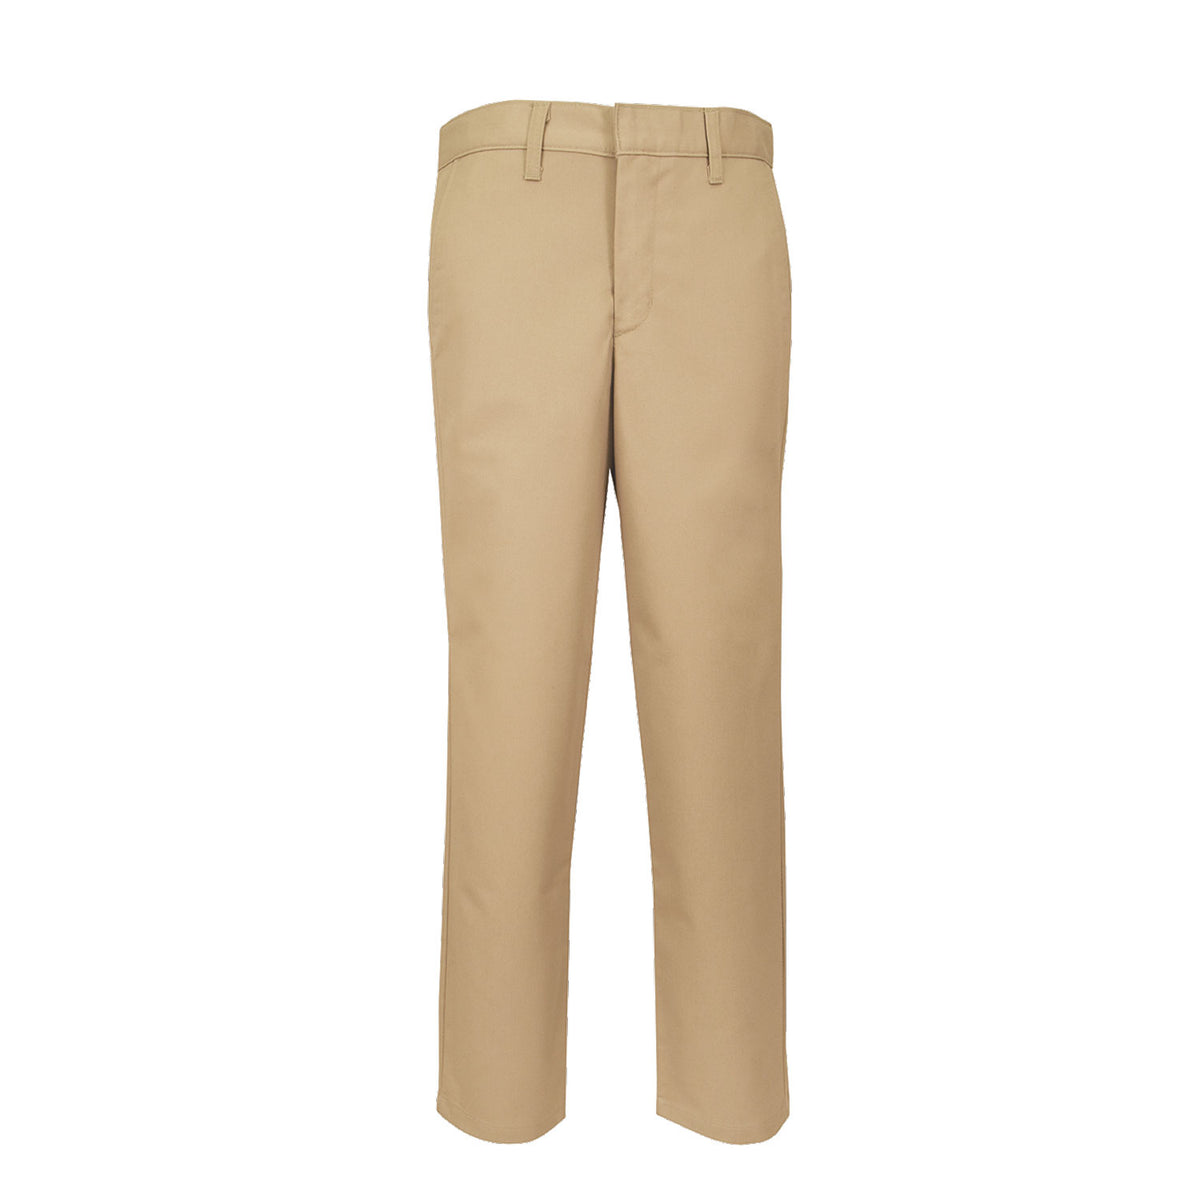 Pants(Emerald), Boy's Fit Flat Front - 1113